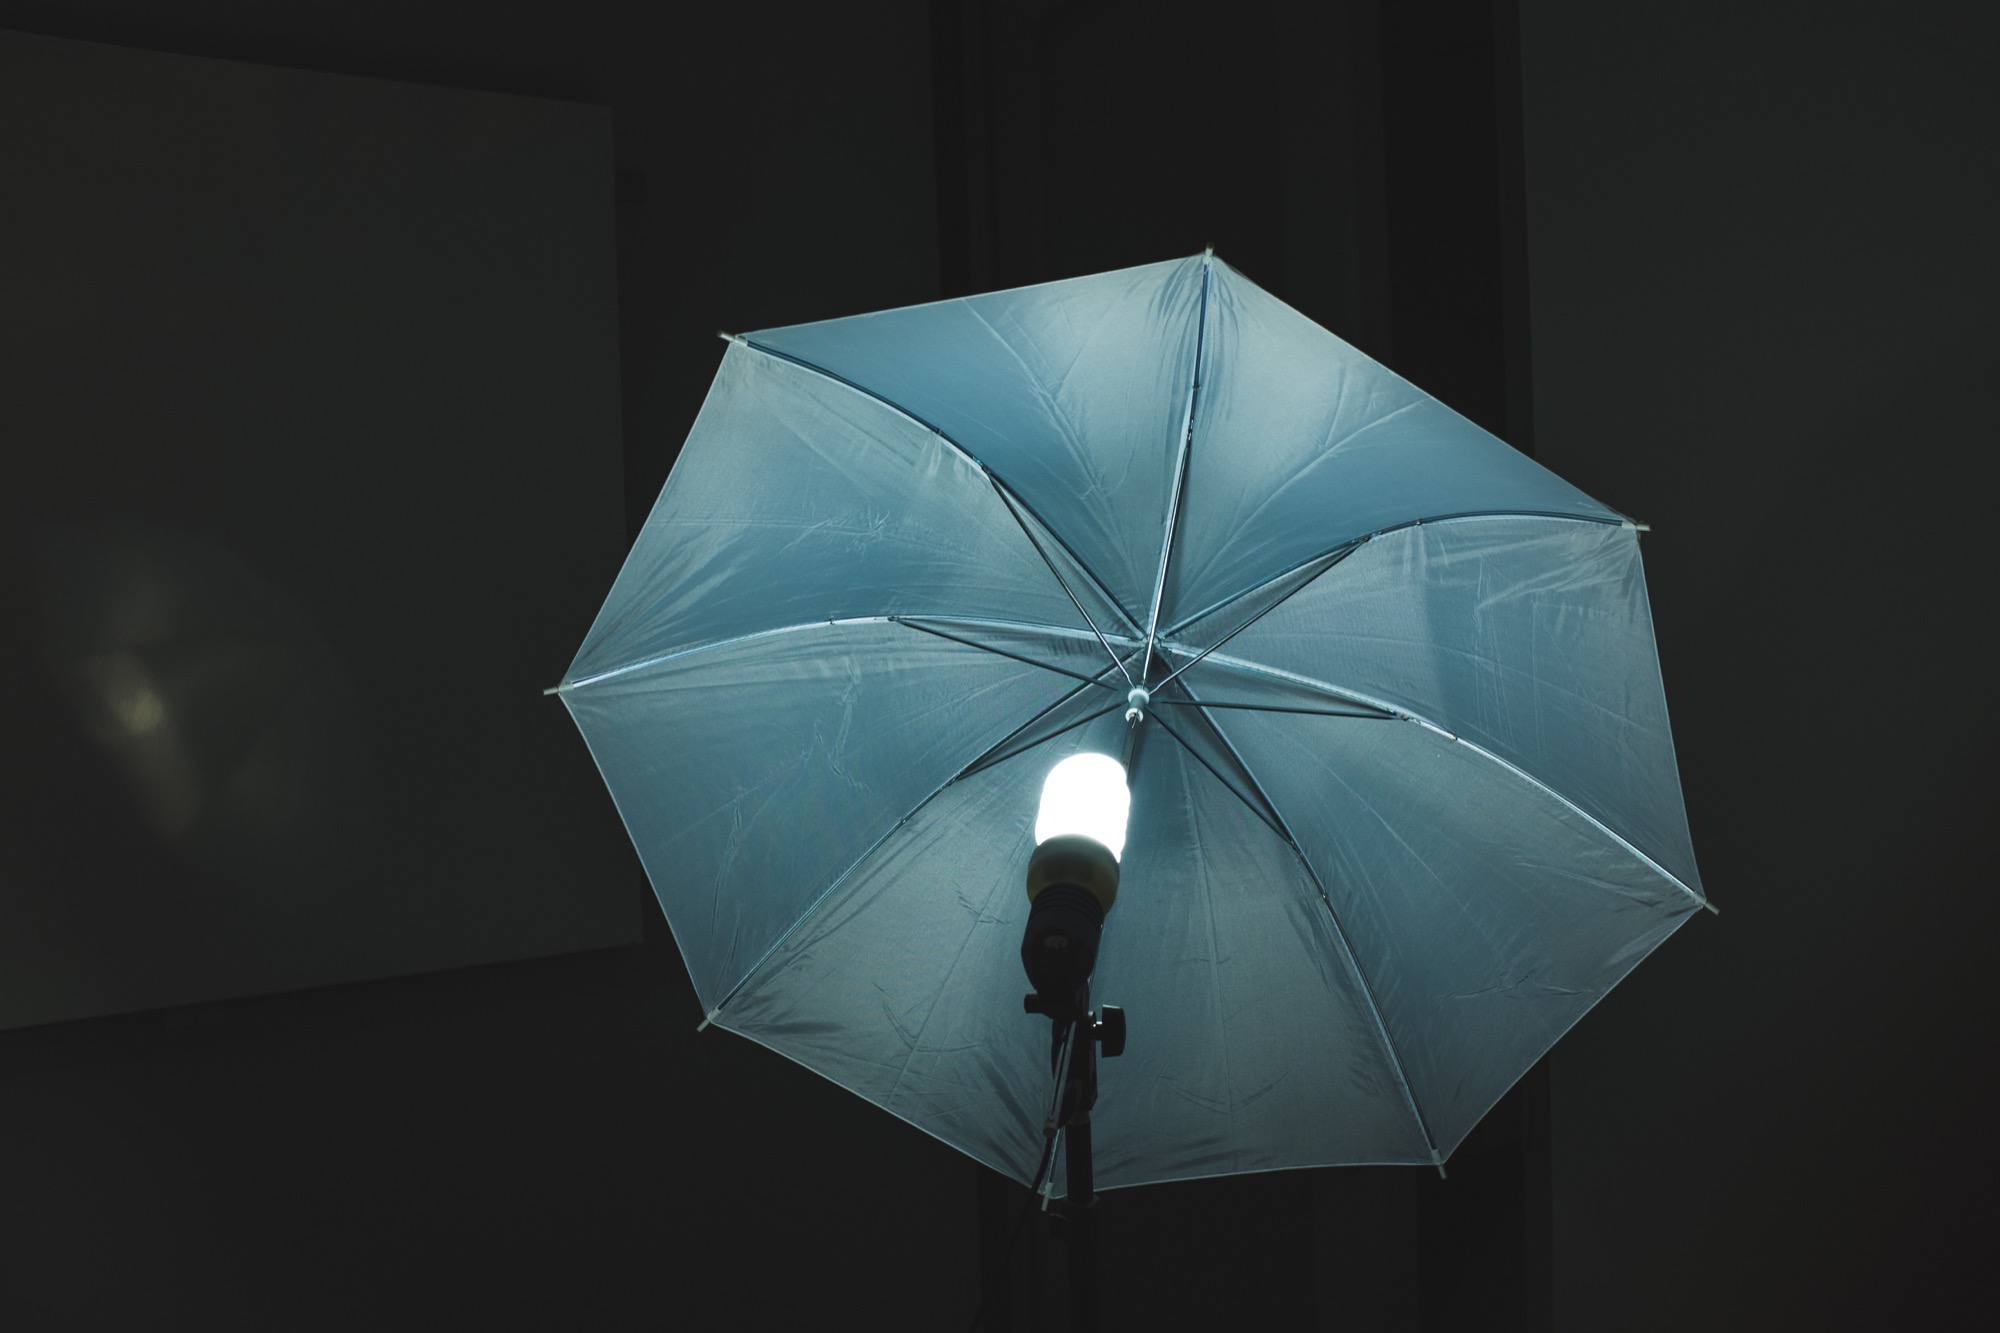 a light with a reflective umbrella